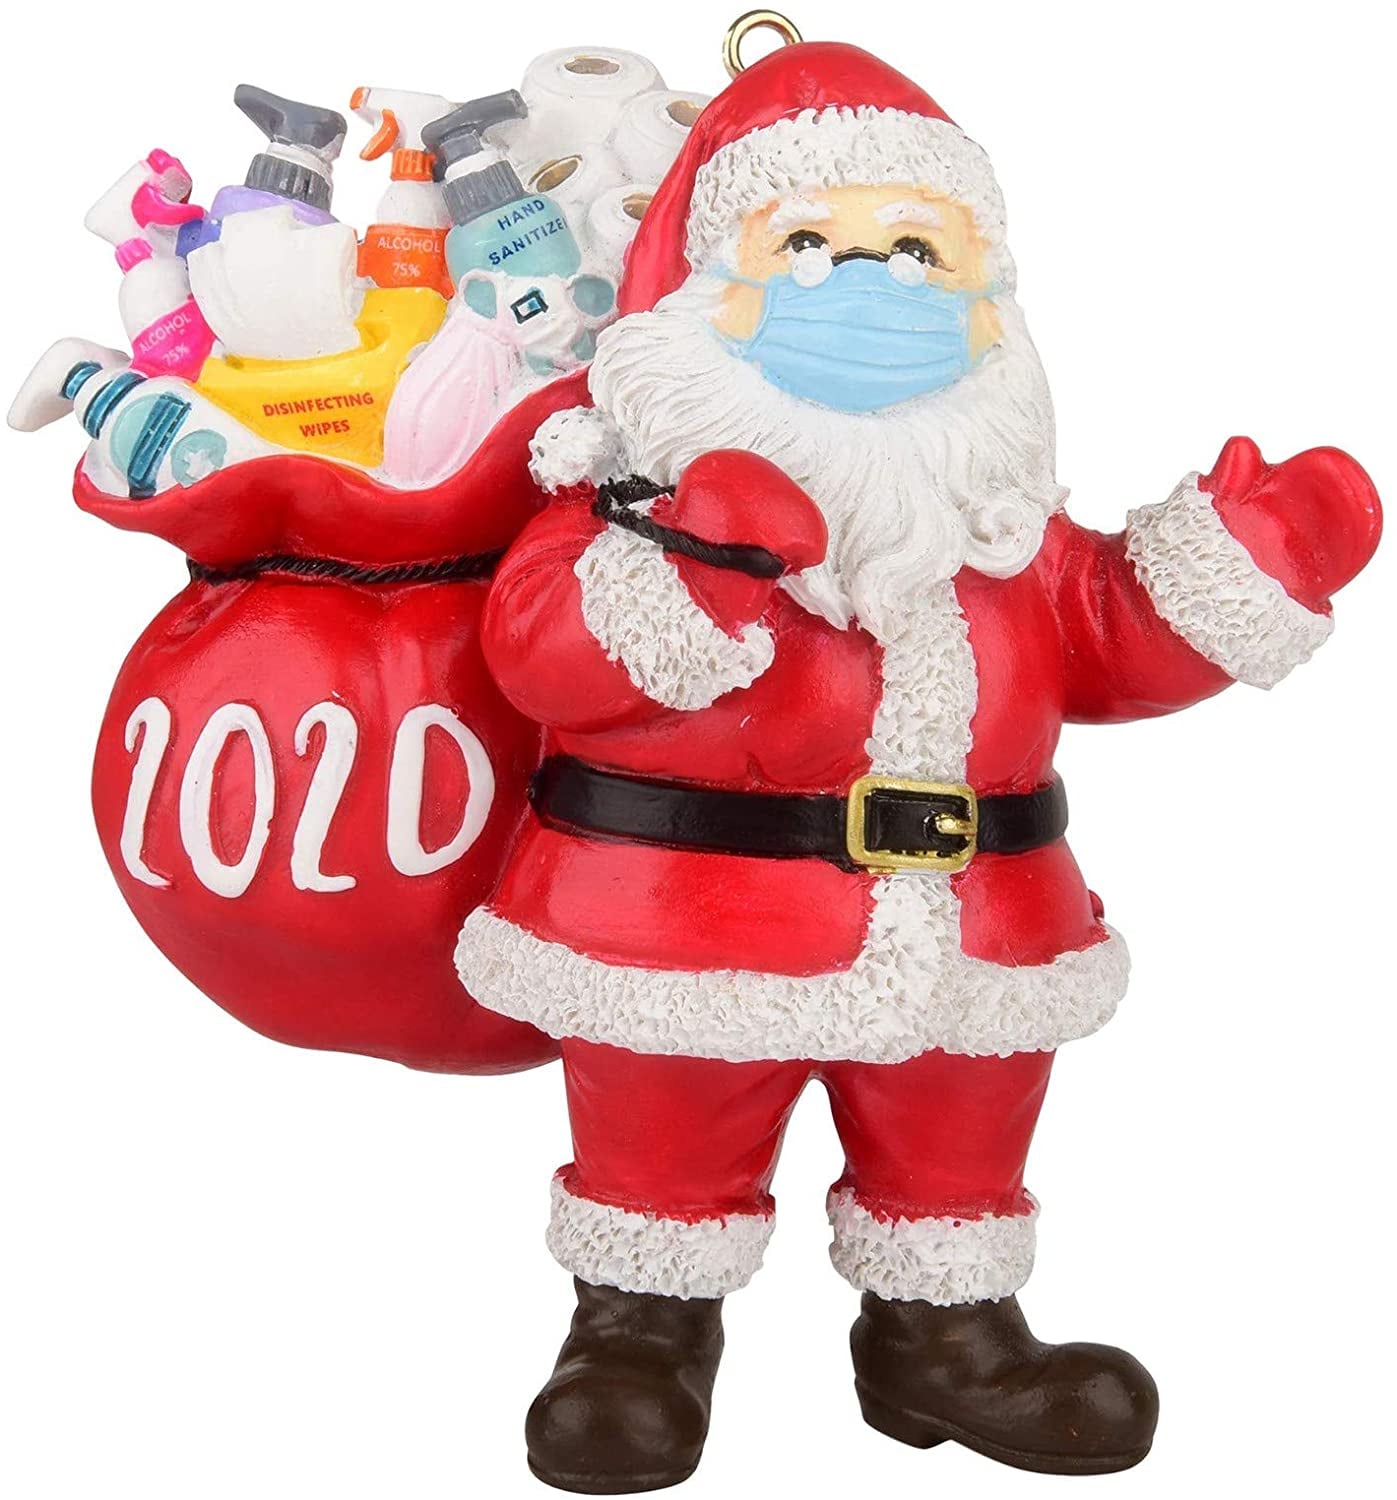 Christmas Mask Merry Christmas Decor for Home Santa Claus Xmas Gifts 2020 